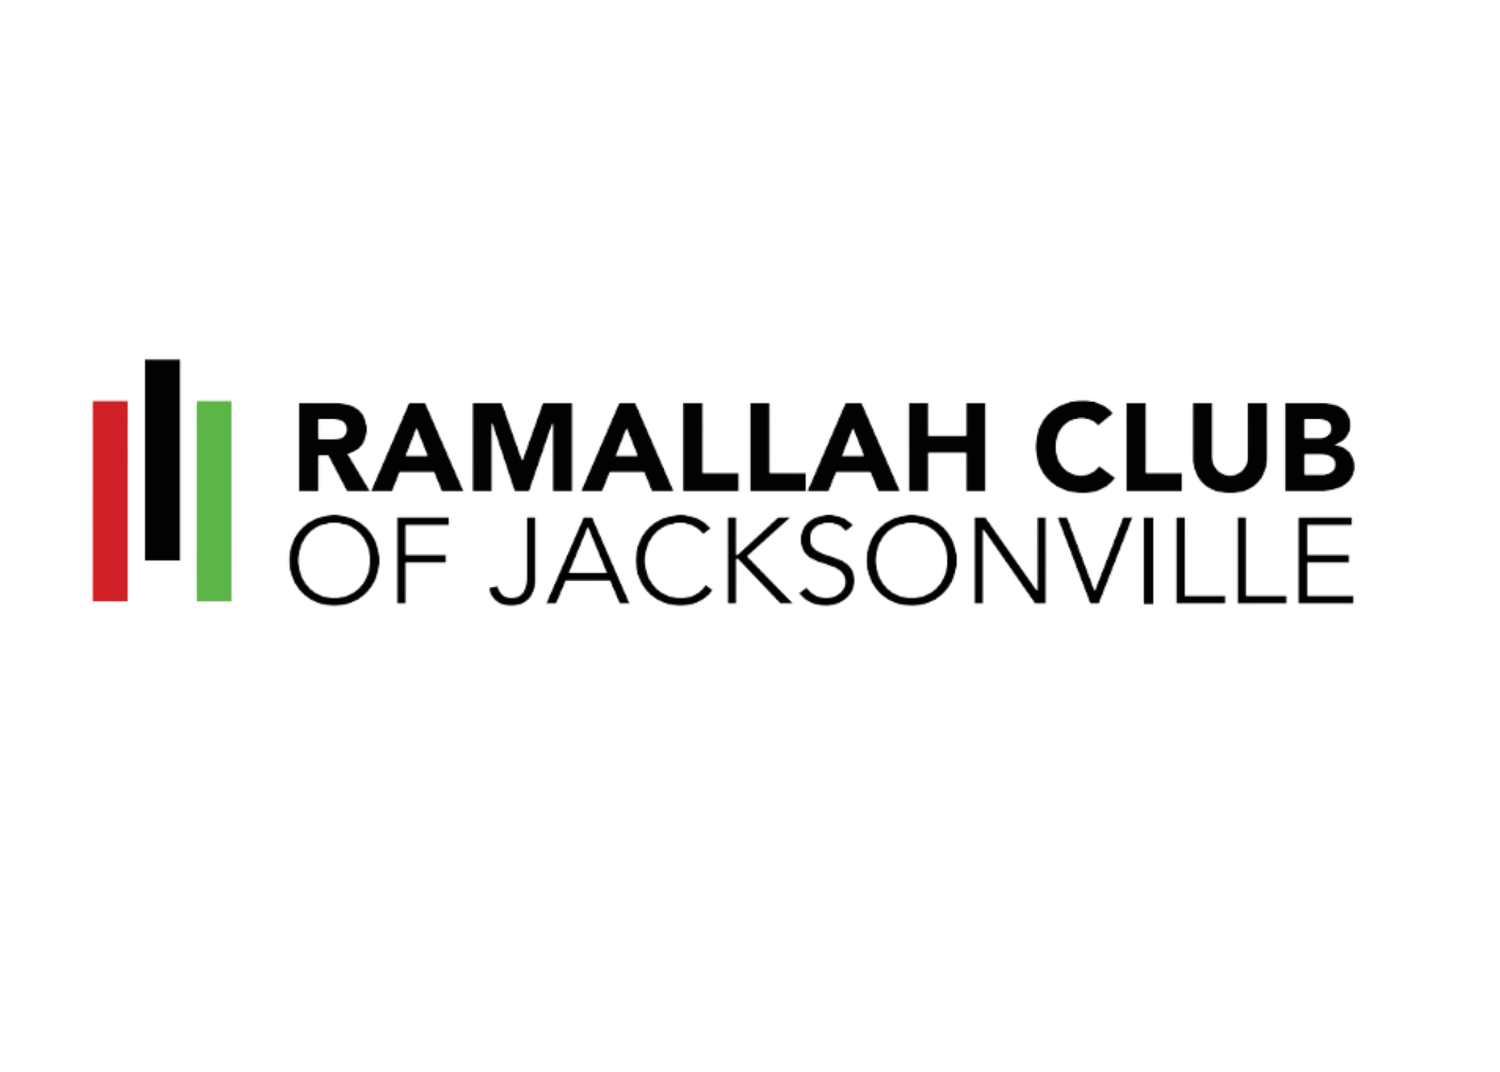 Ramallah Club of Jacksonville